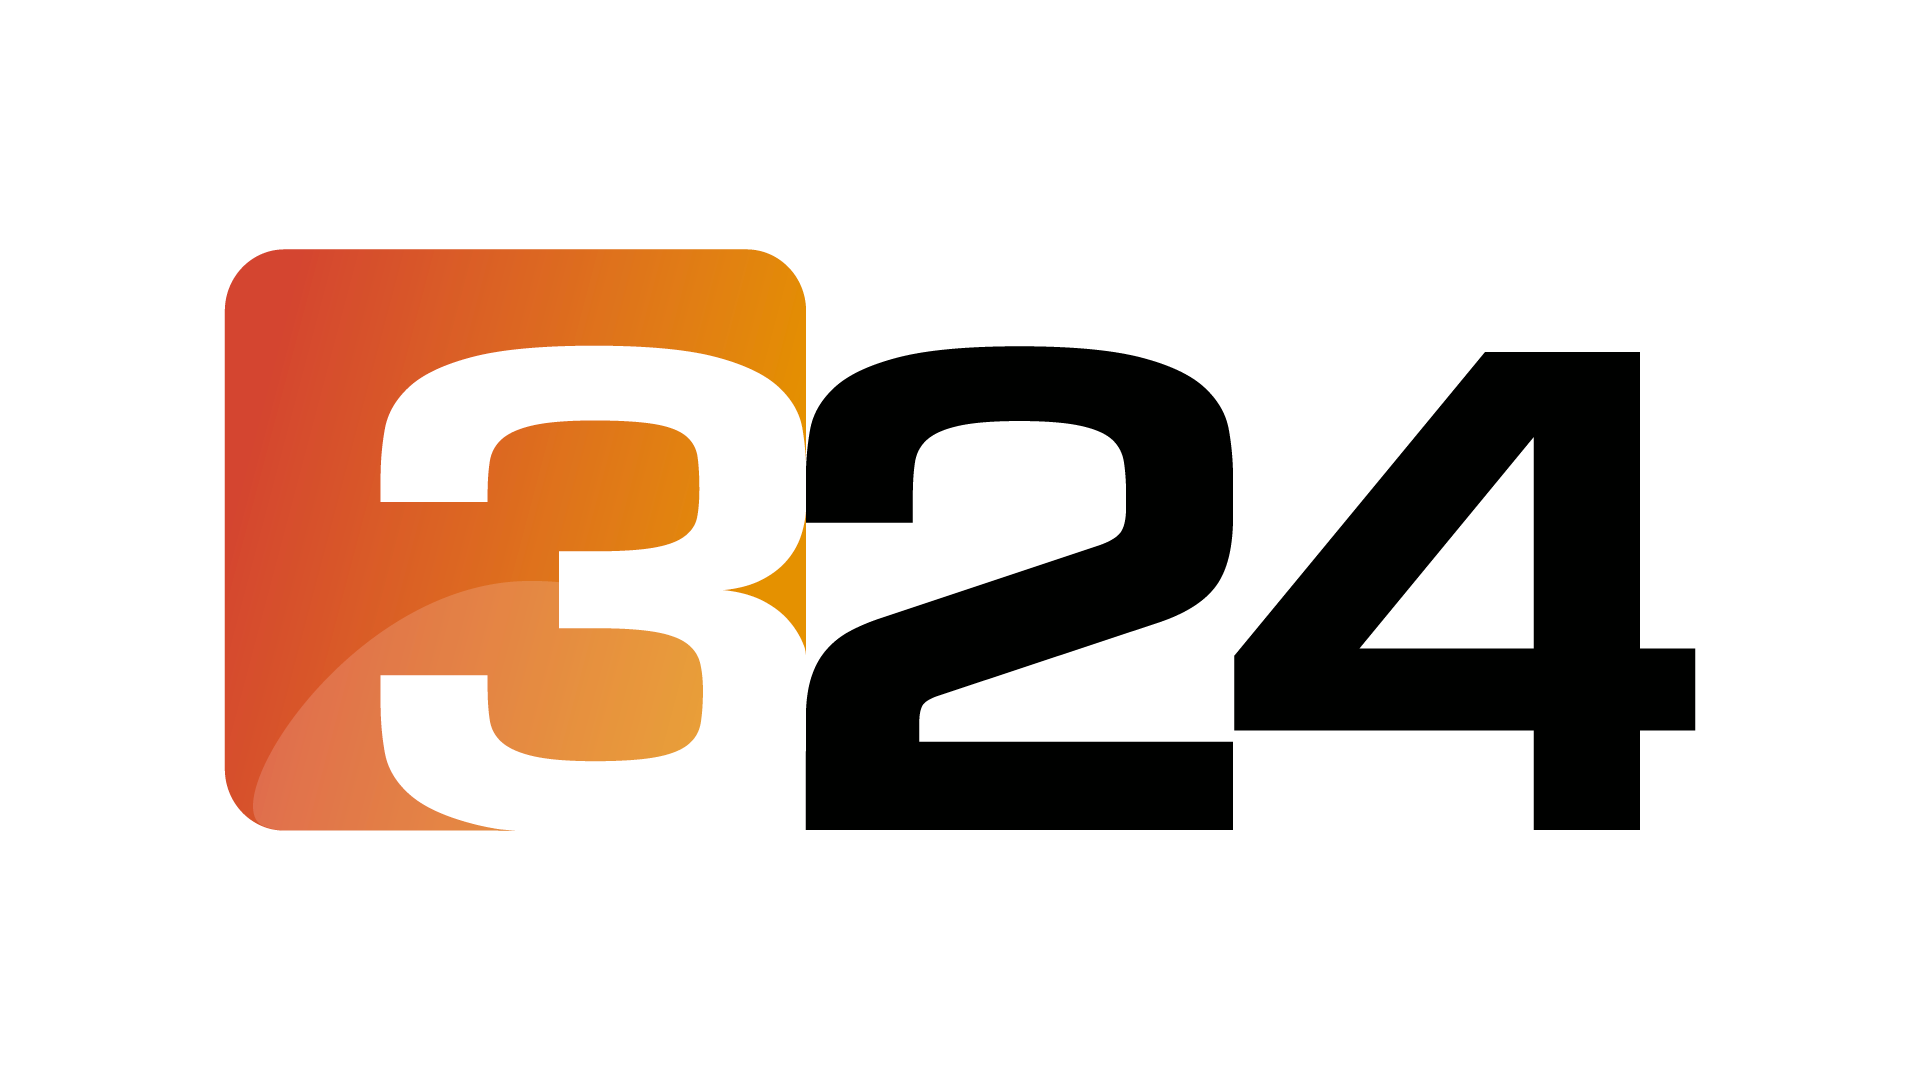 Canal 3. Телеканал стр. 24tv. Логотип 24 регион. Логотипы телеканалов Испании.